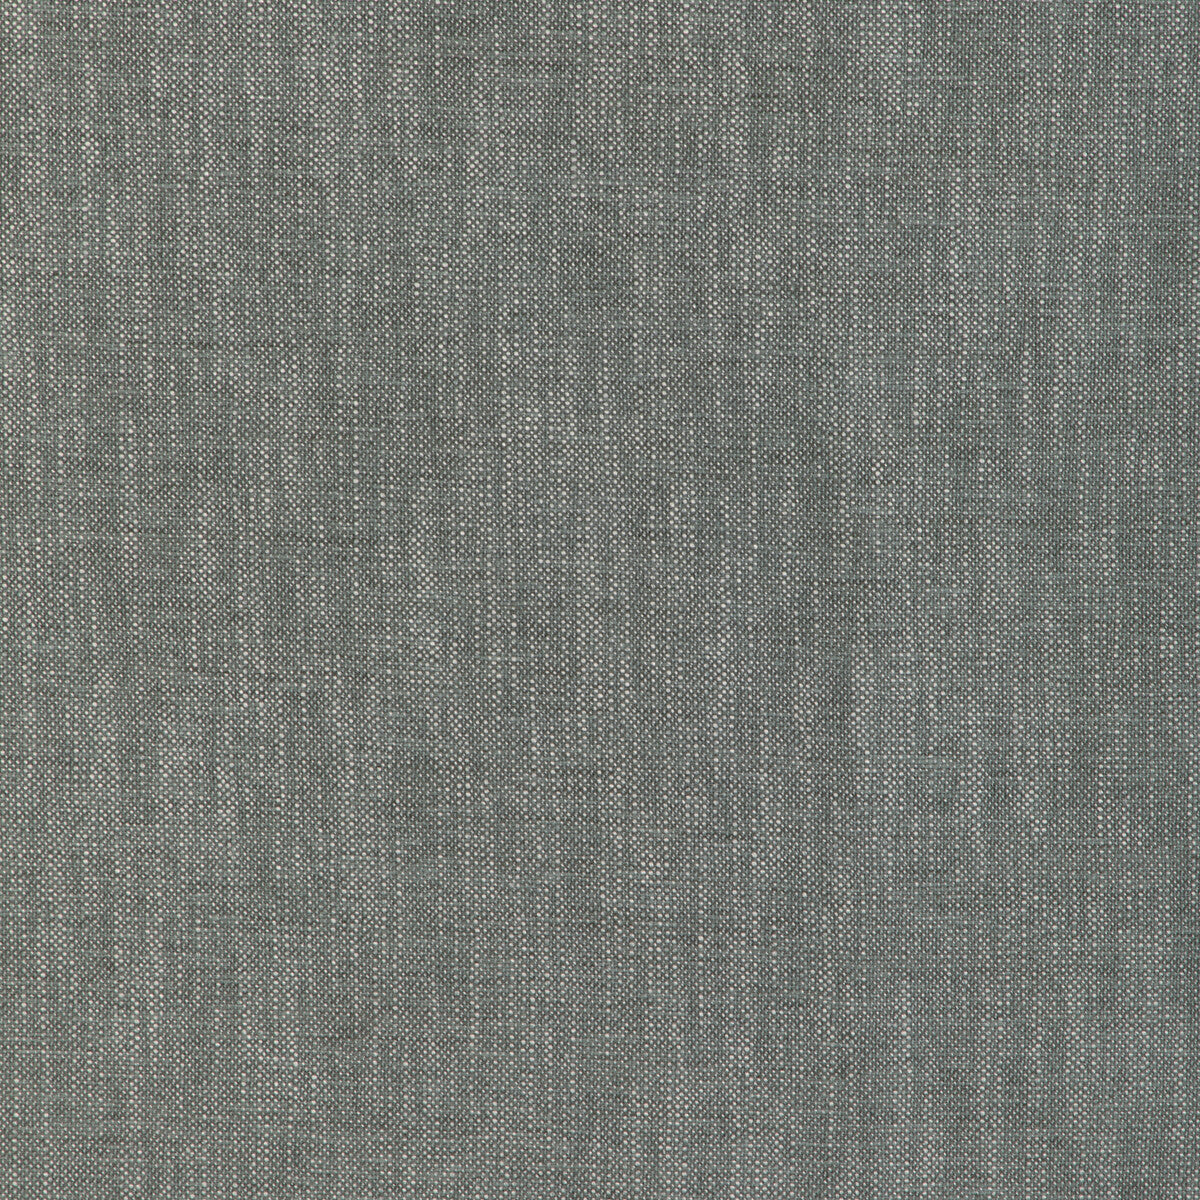 Kravet Smart fabric in 36672-30 color - pattern 36672.30.0 - by Kravet Smart in the Performance Kravetarmor collection